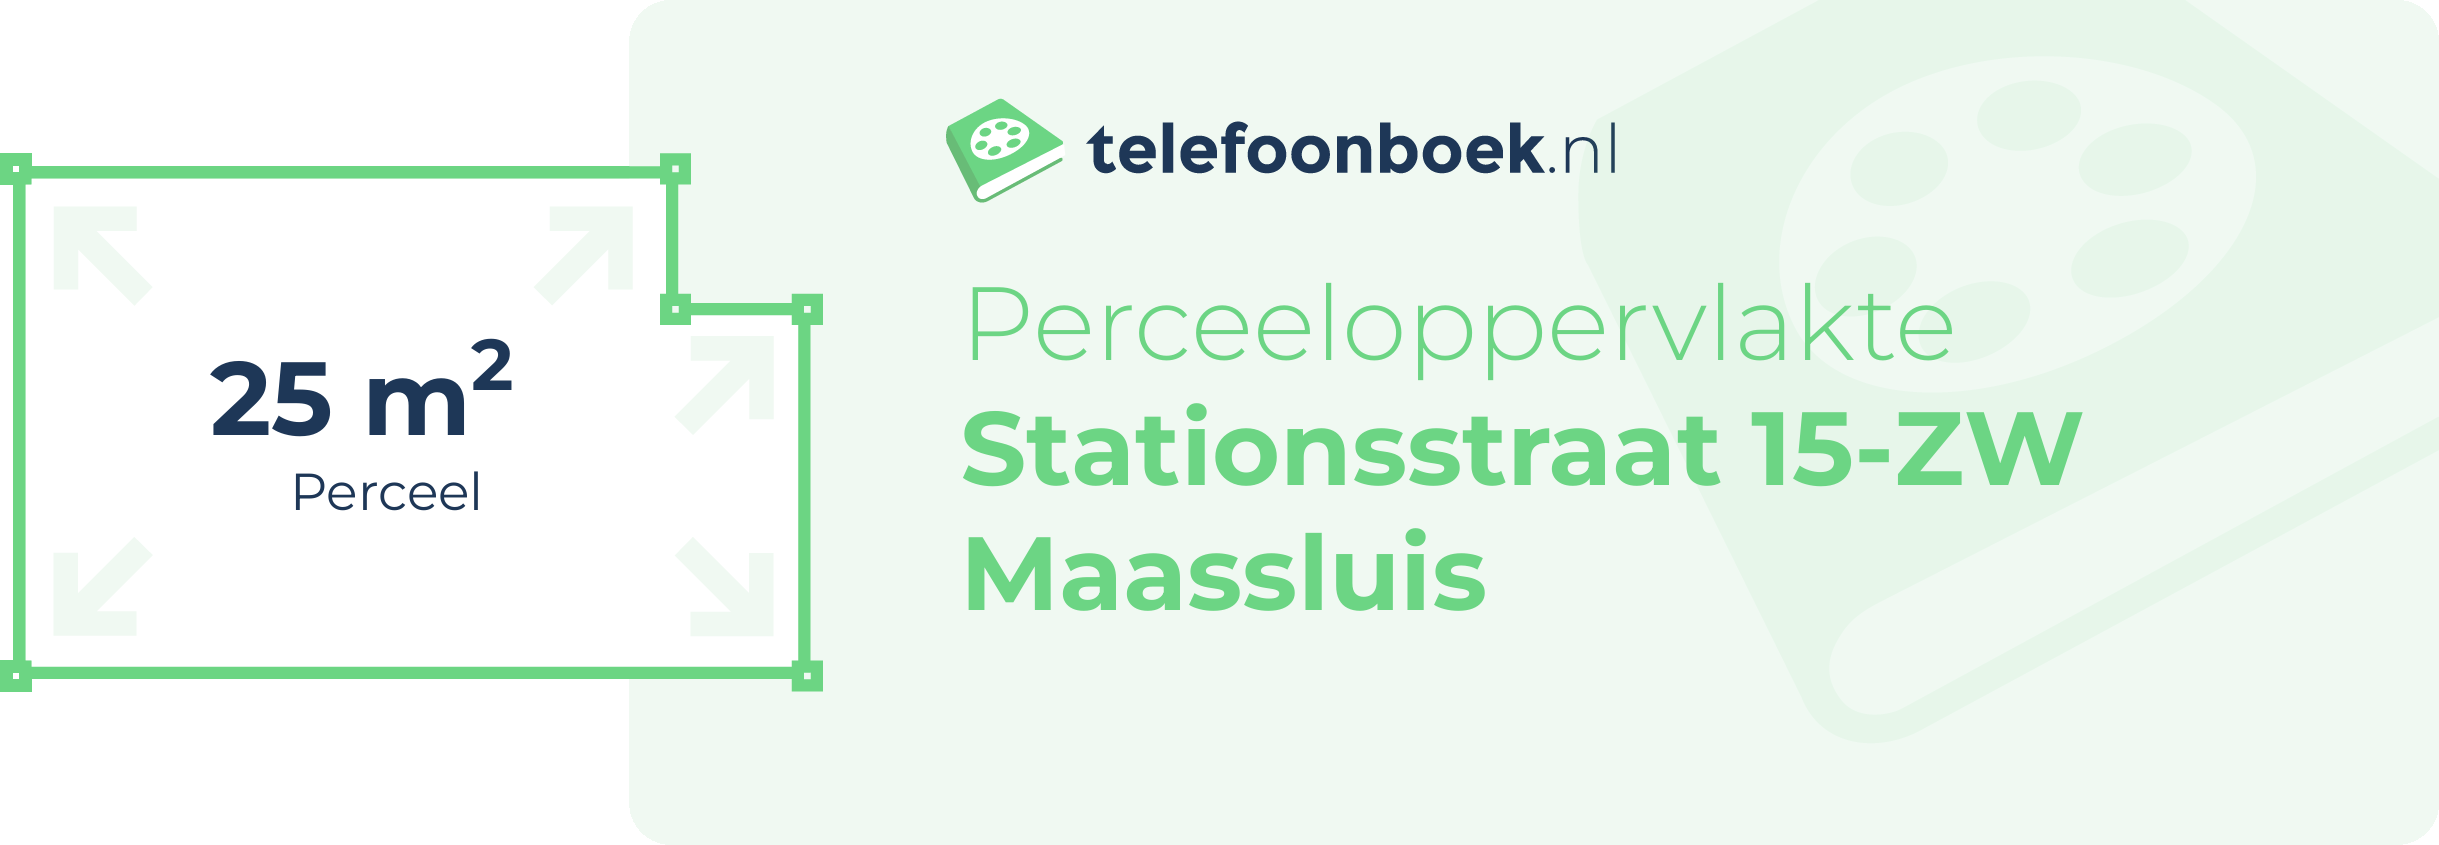 Perceeloppervlakte Stationsstraat 15-ZW Maassluis